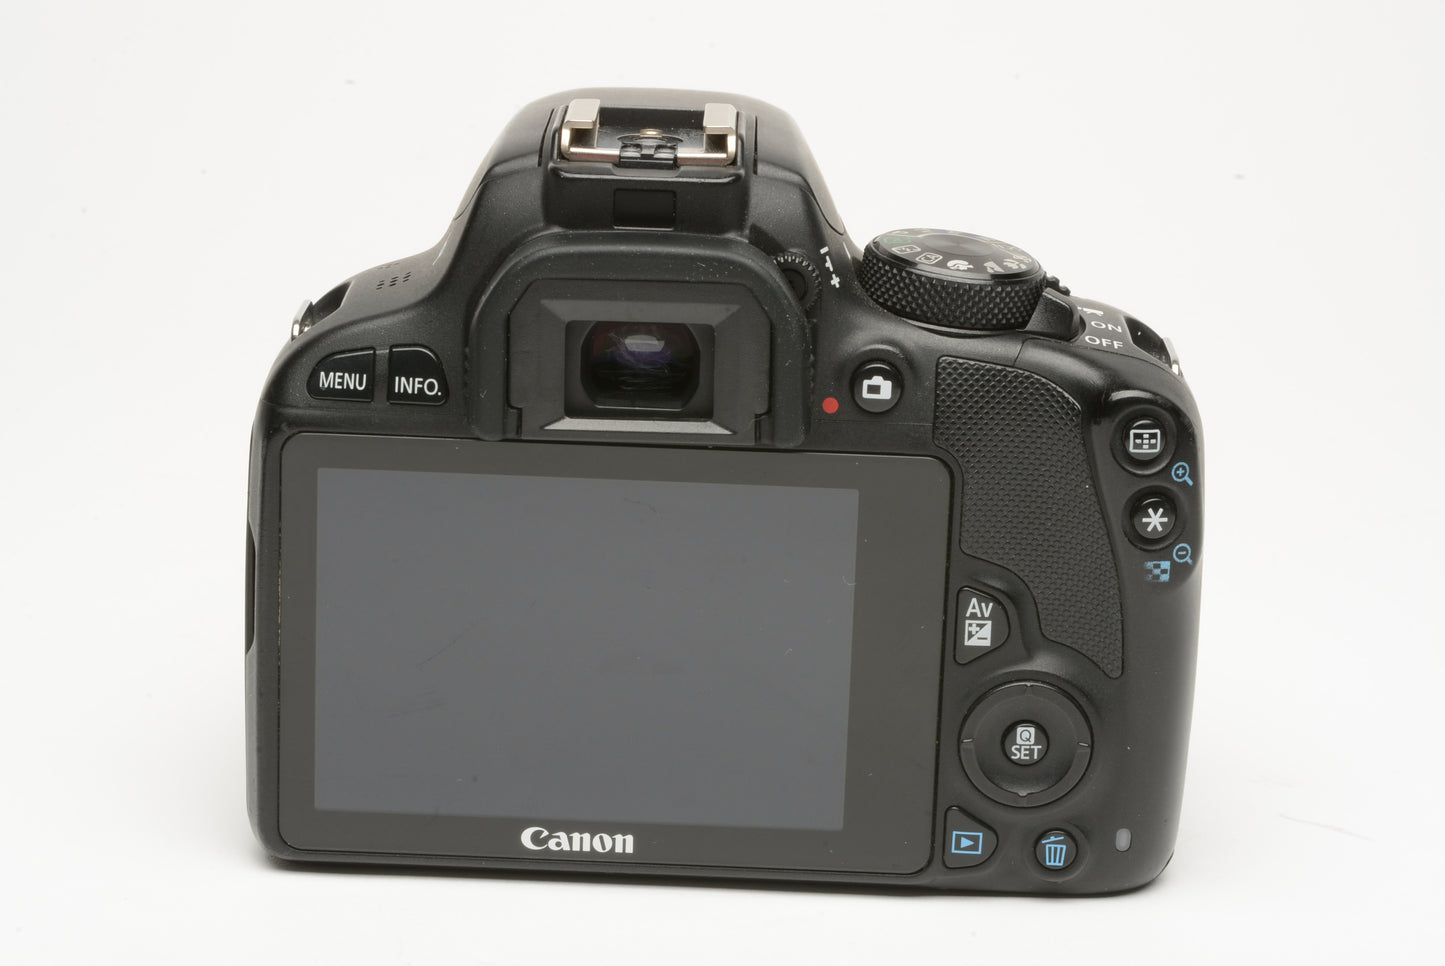 Pentax 67 SMC 105mm f2.4 lens for 67 series cameras, caps, clean!